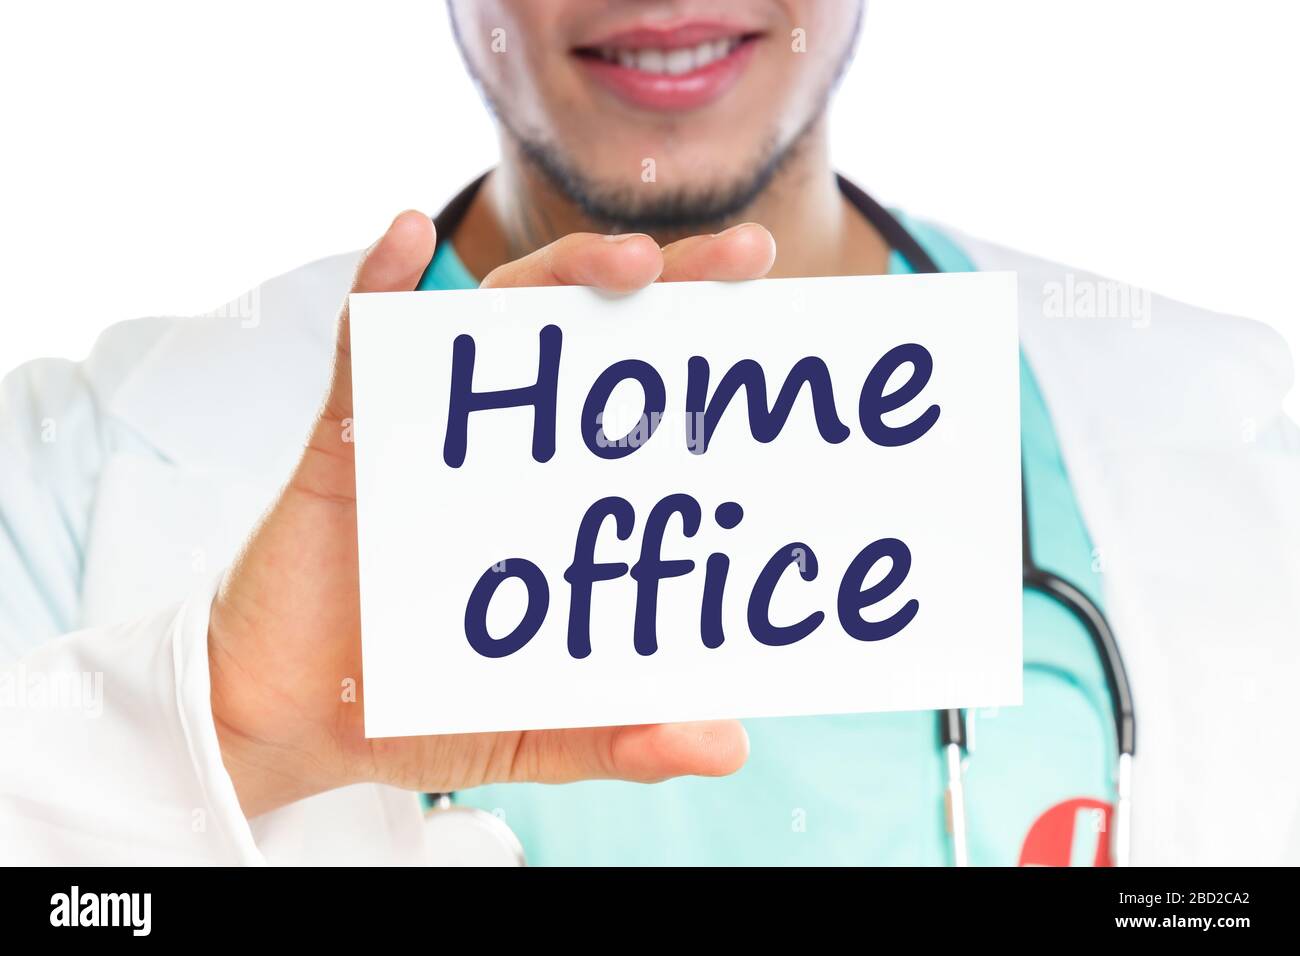 Home office work working Corona virus coronavirus disease doctor ill illness healthy health with sign Stock Photo